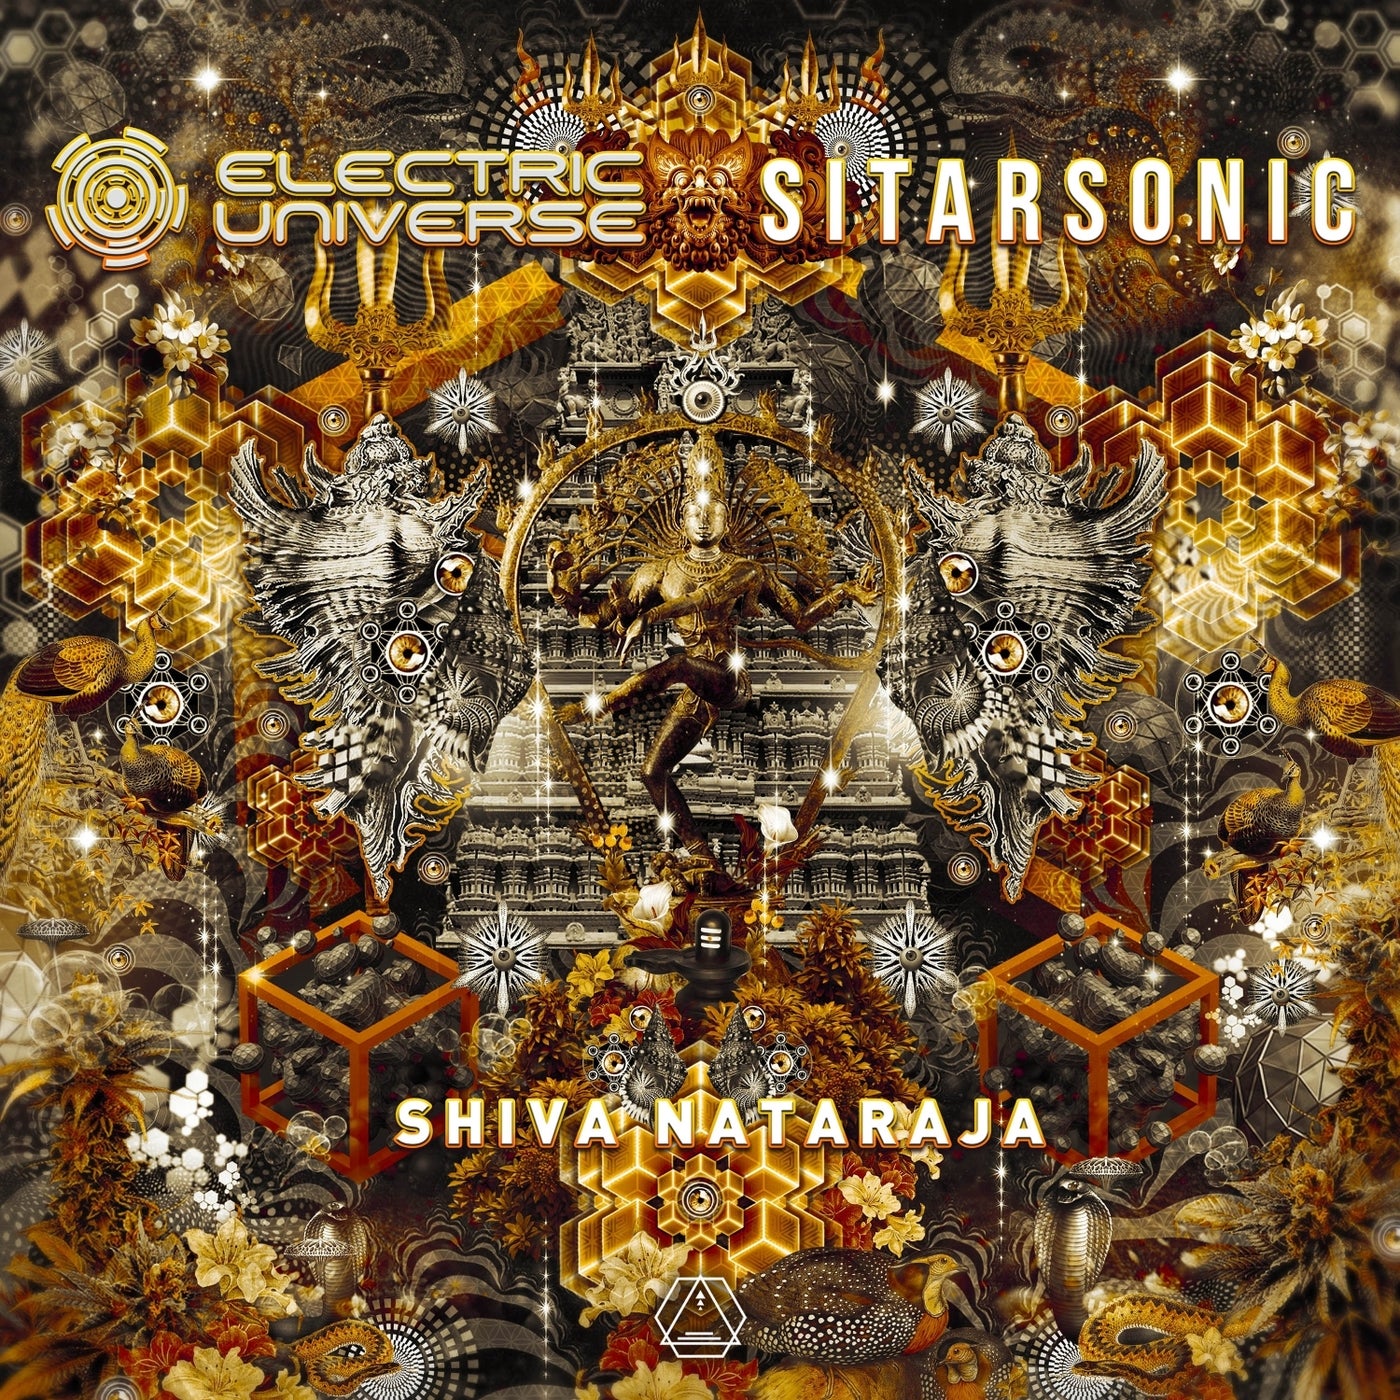 Electric Universe, Sitarsonic - Shiva Nataraja (Original Mix)